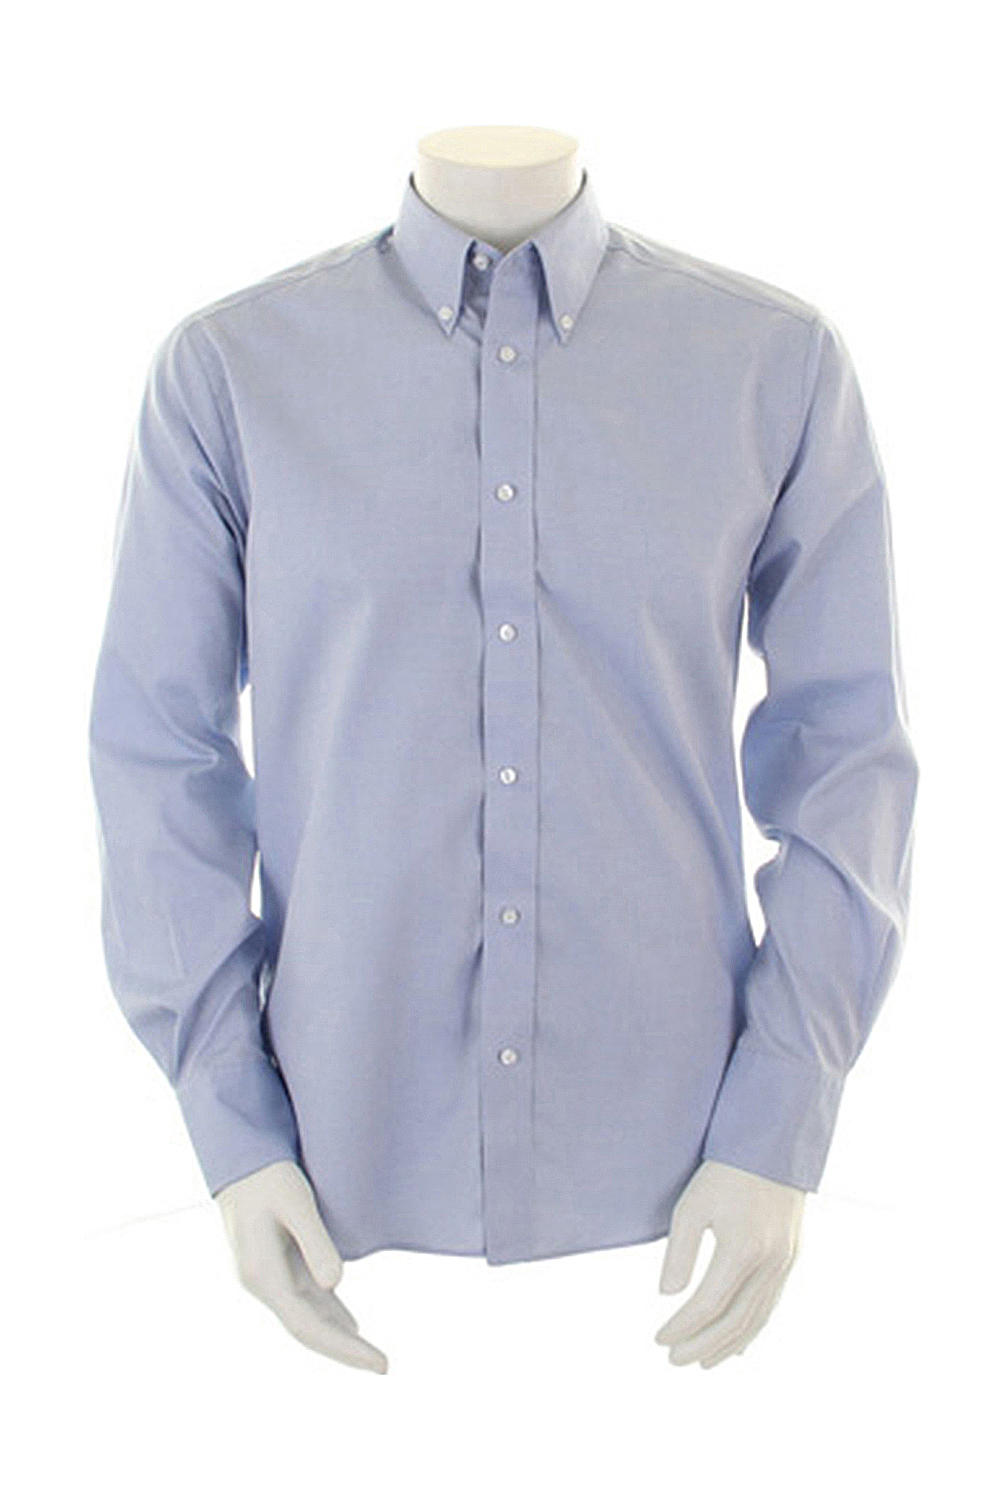 Kustom Kit Tailored Fit Premium Oxford Herren Langarm Hemd